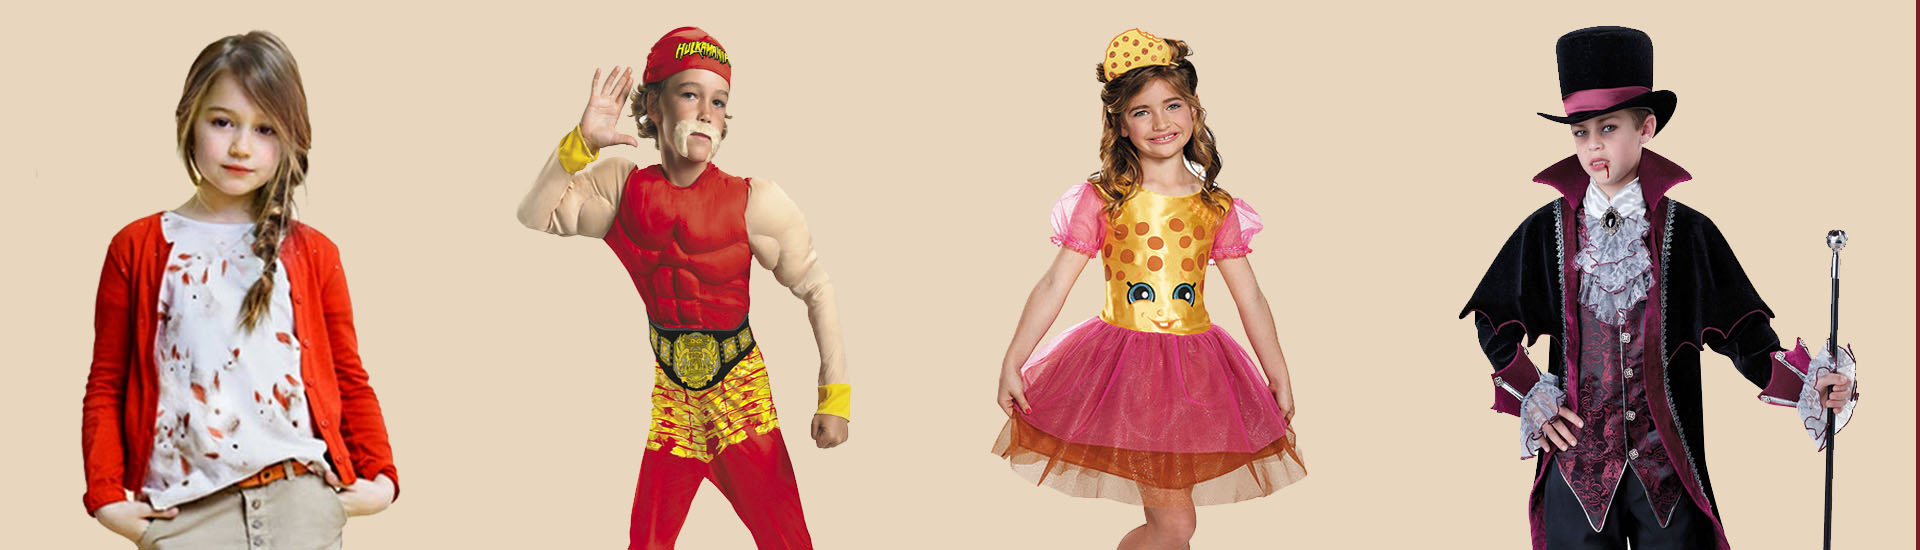 Kids-Costumes